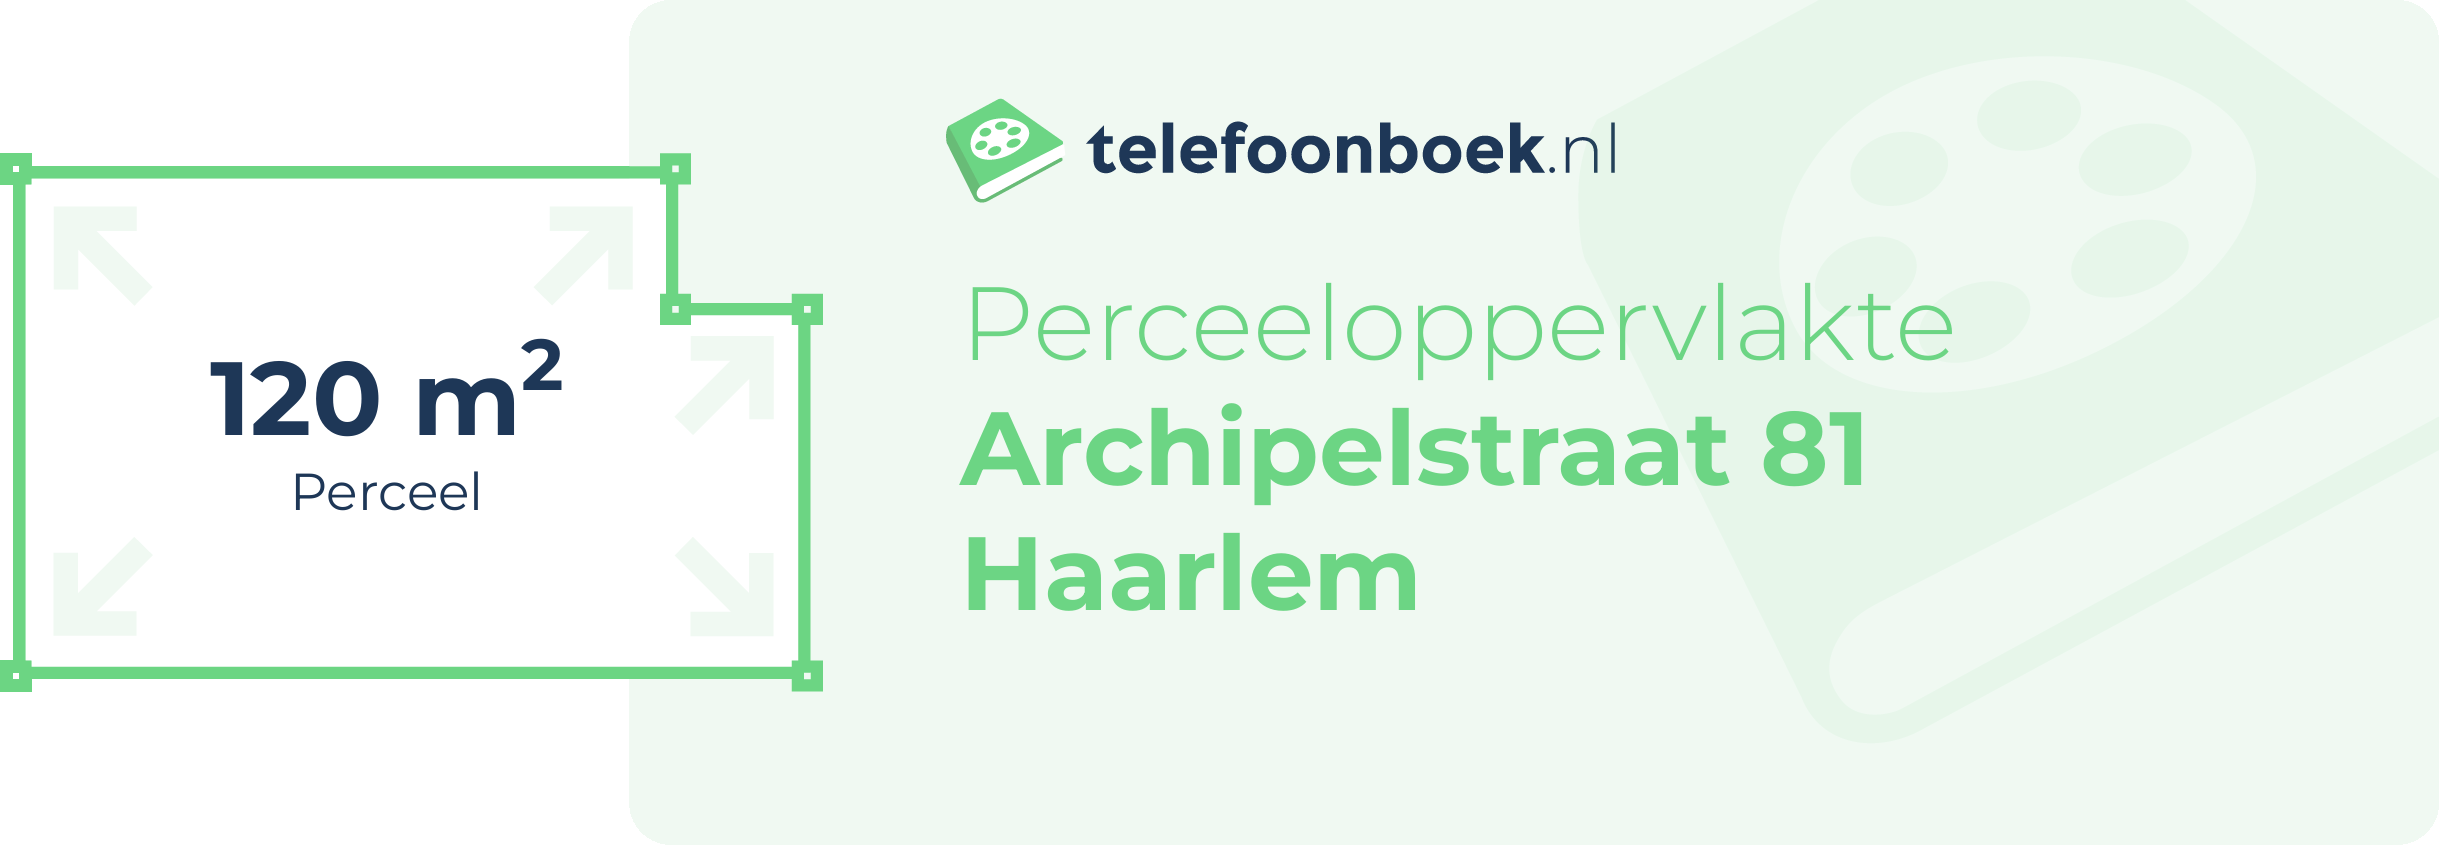 Perceeloppervlakte Archipelstraat 81 Haarlem